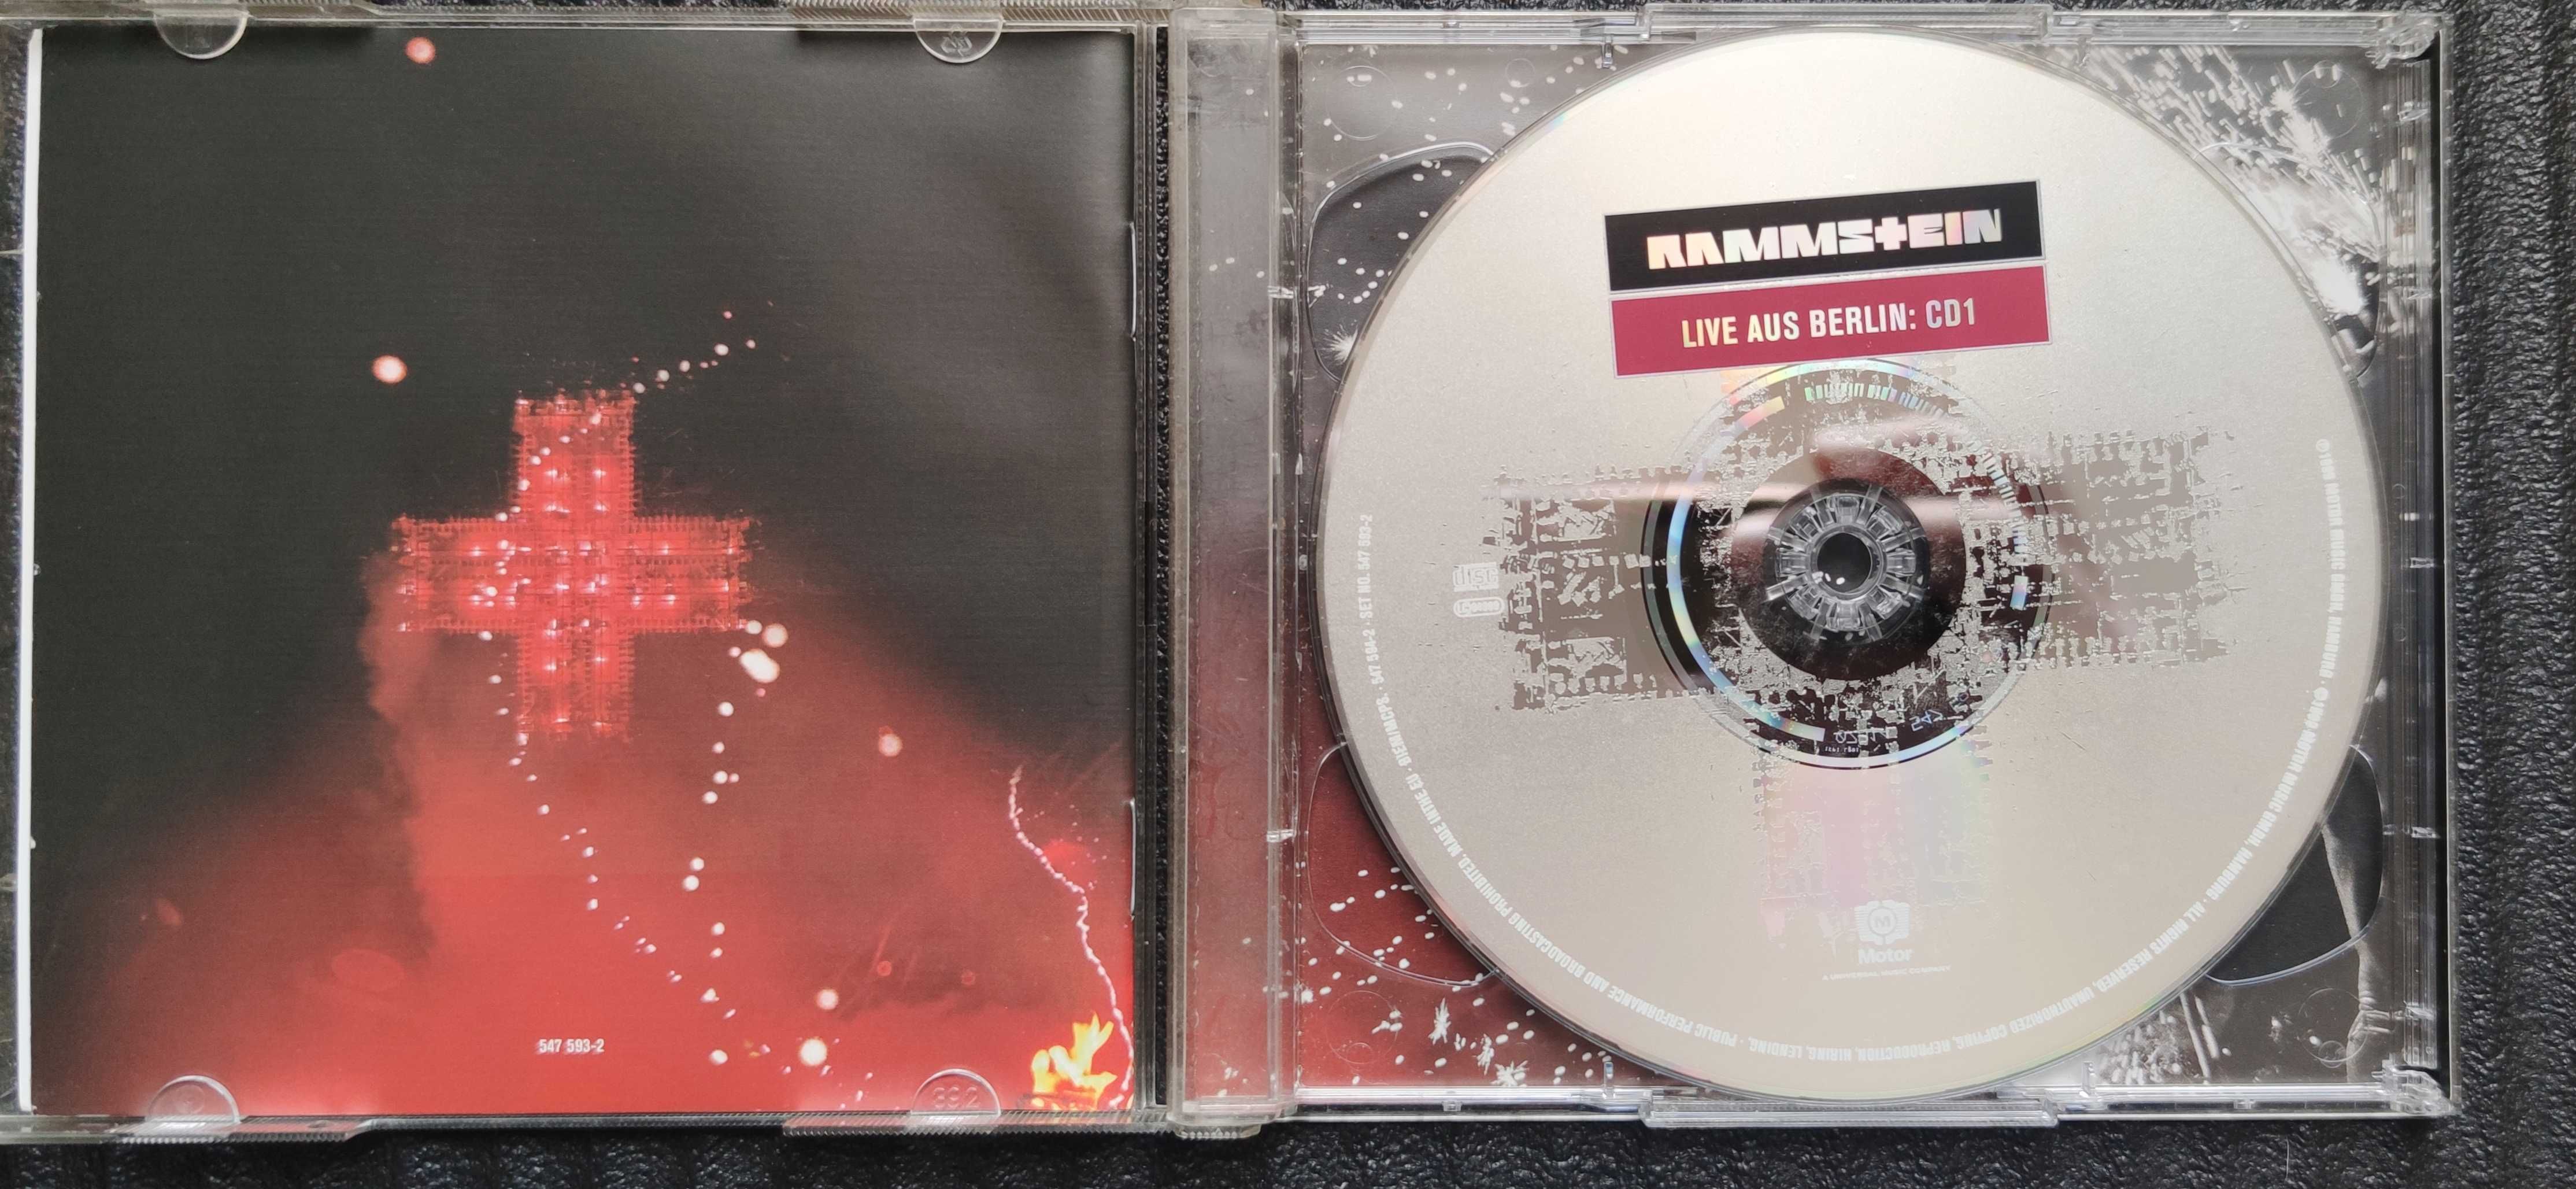 Rammstein - Live aus Berlin duplo cd - como novo